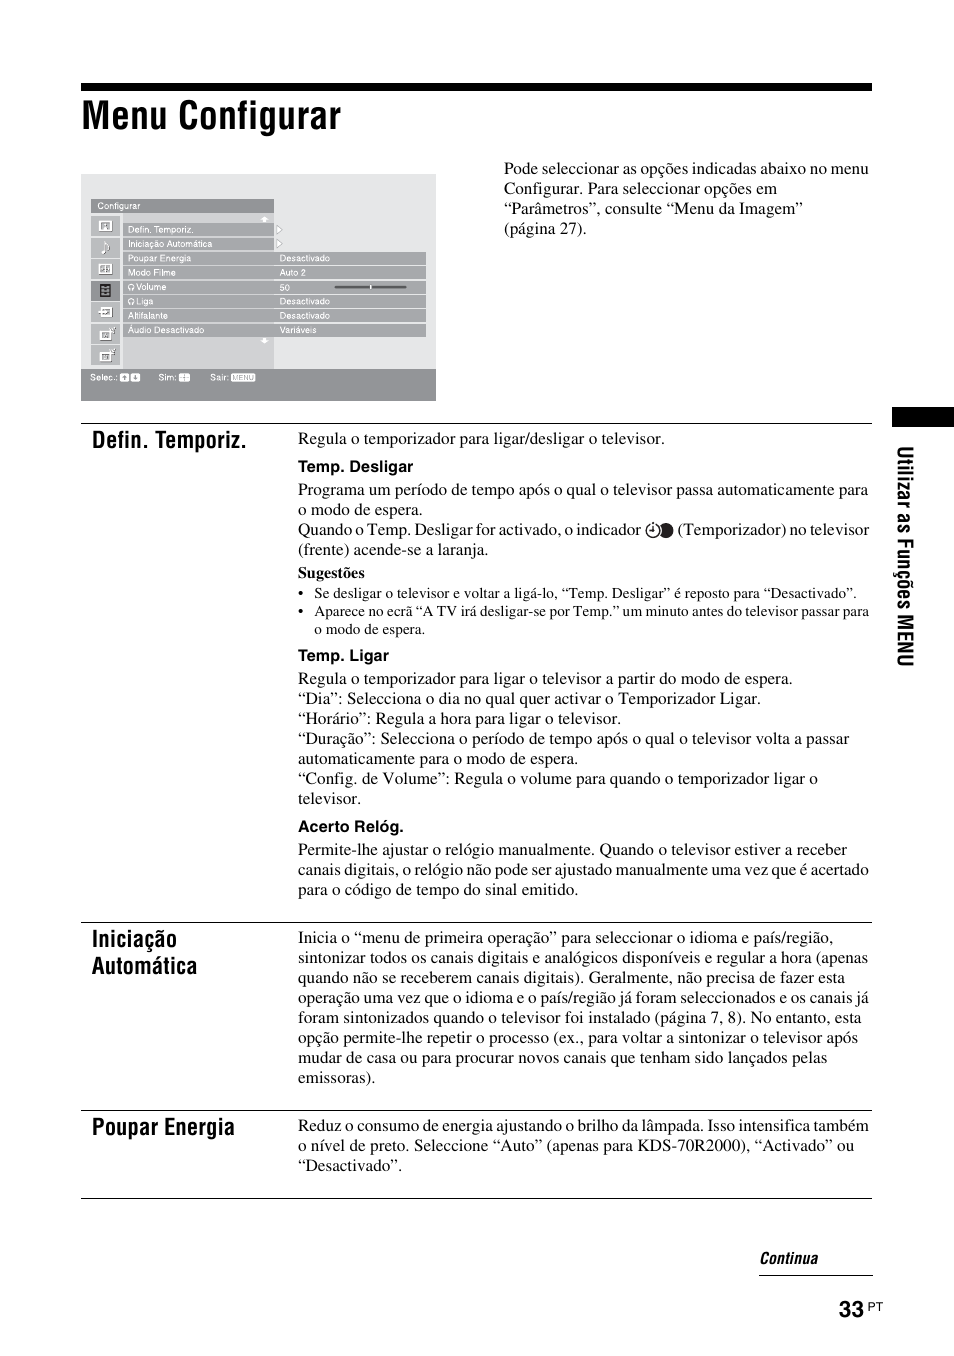 Menu configurar | Инструкция по эксплуатации Sony KDS-70R2000 | Страница 279 / 372